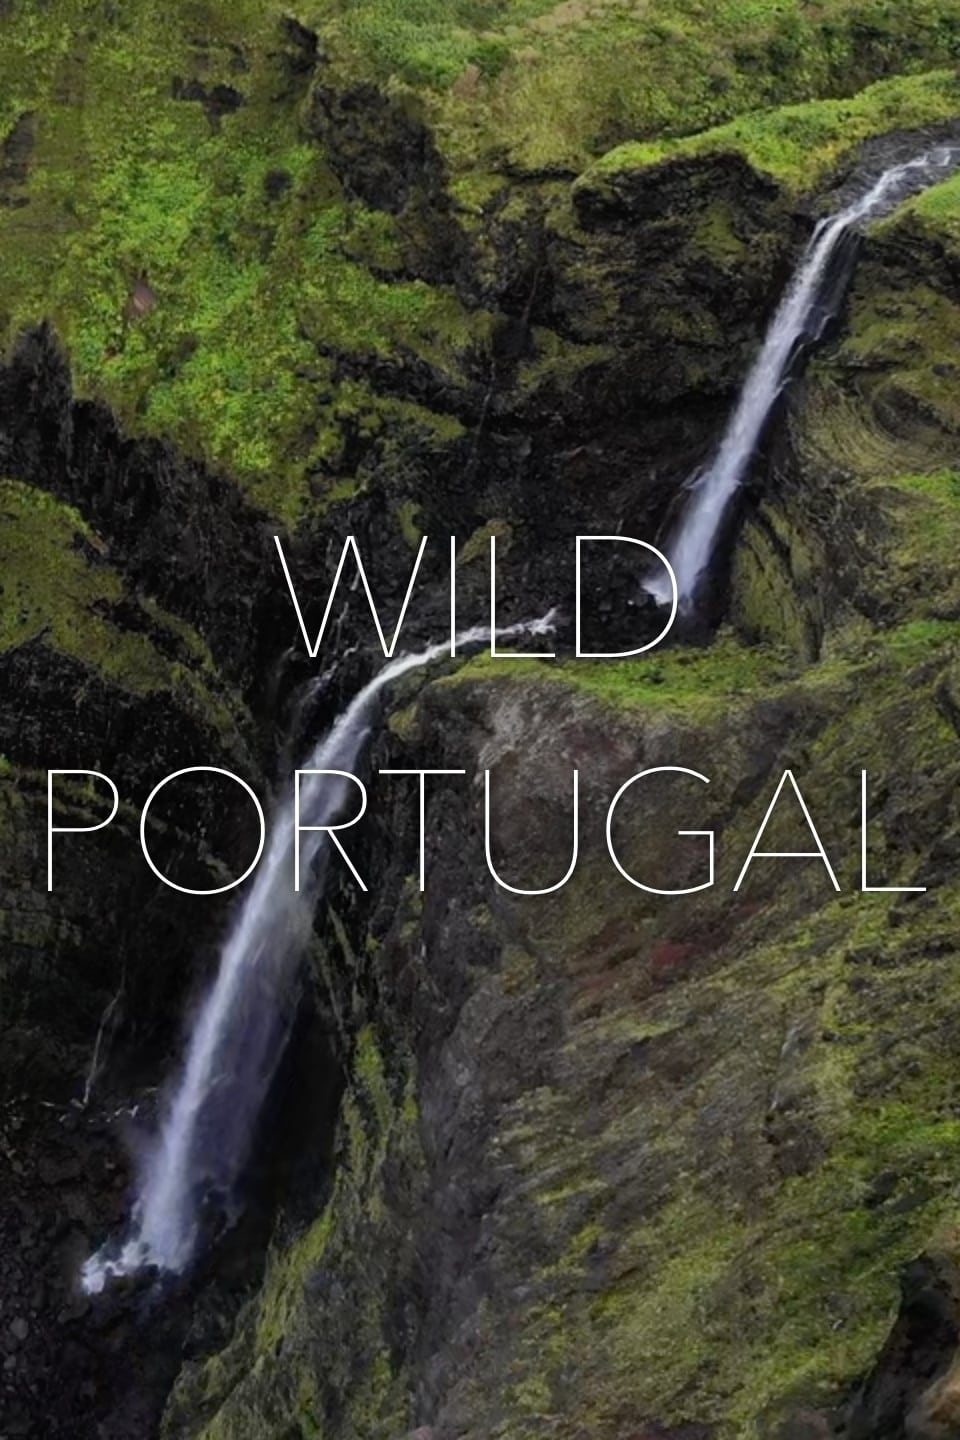 Caratula de Wild Portugal (Portugal salvaje) 